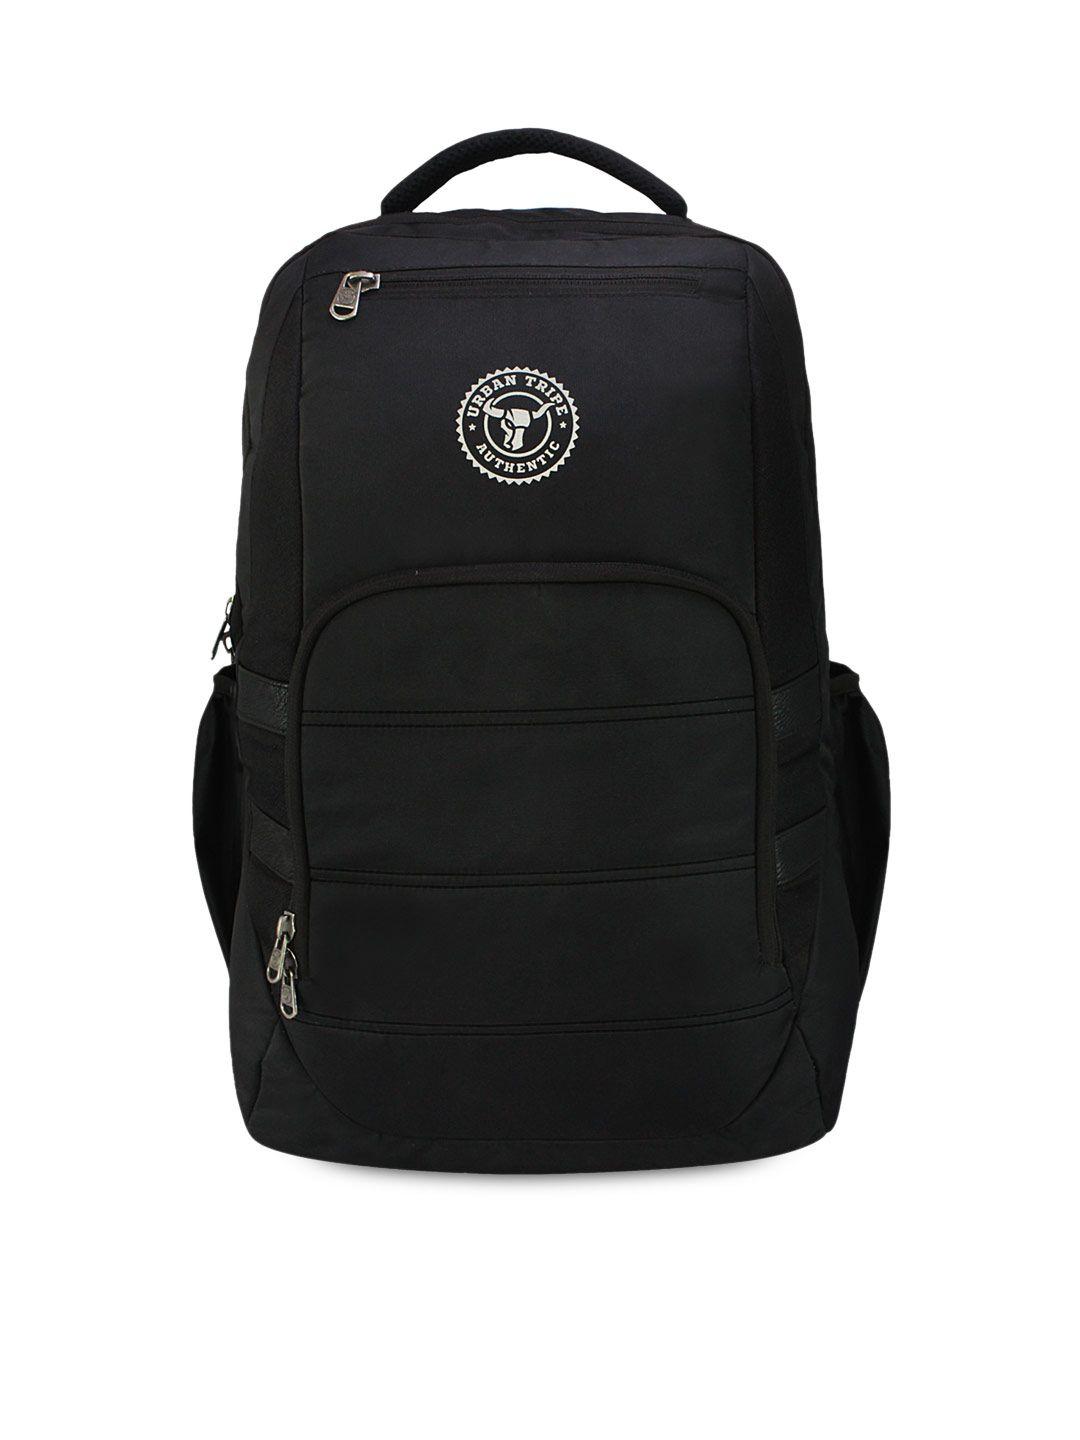 urban tribe unisex black backpack